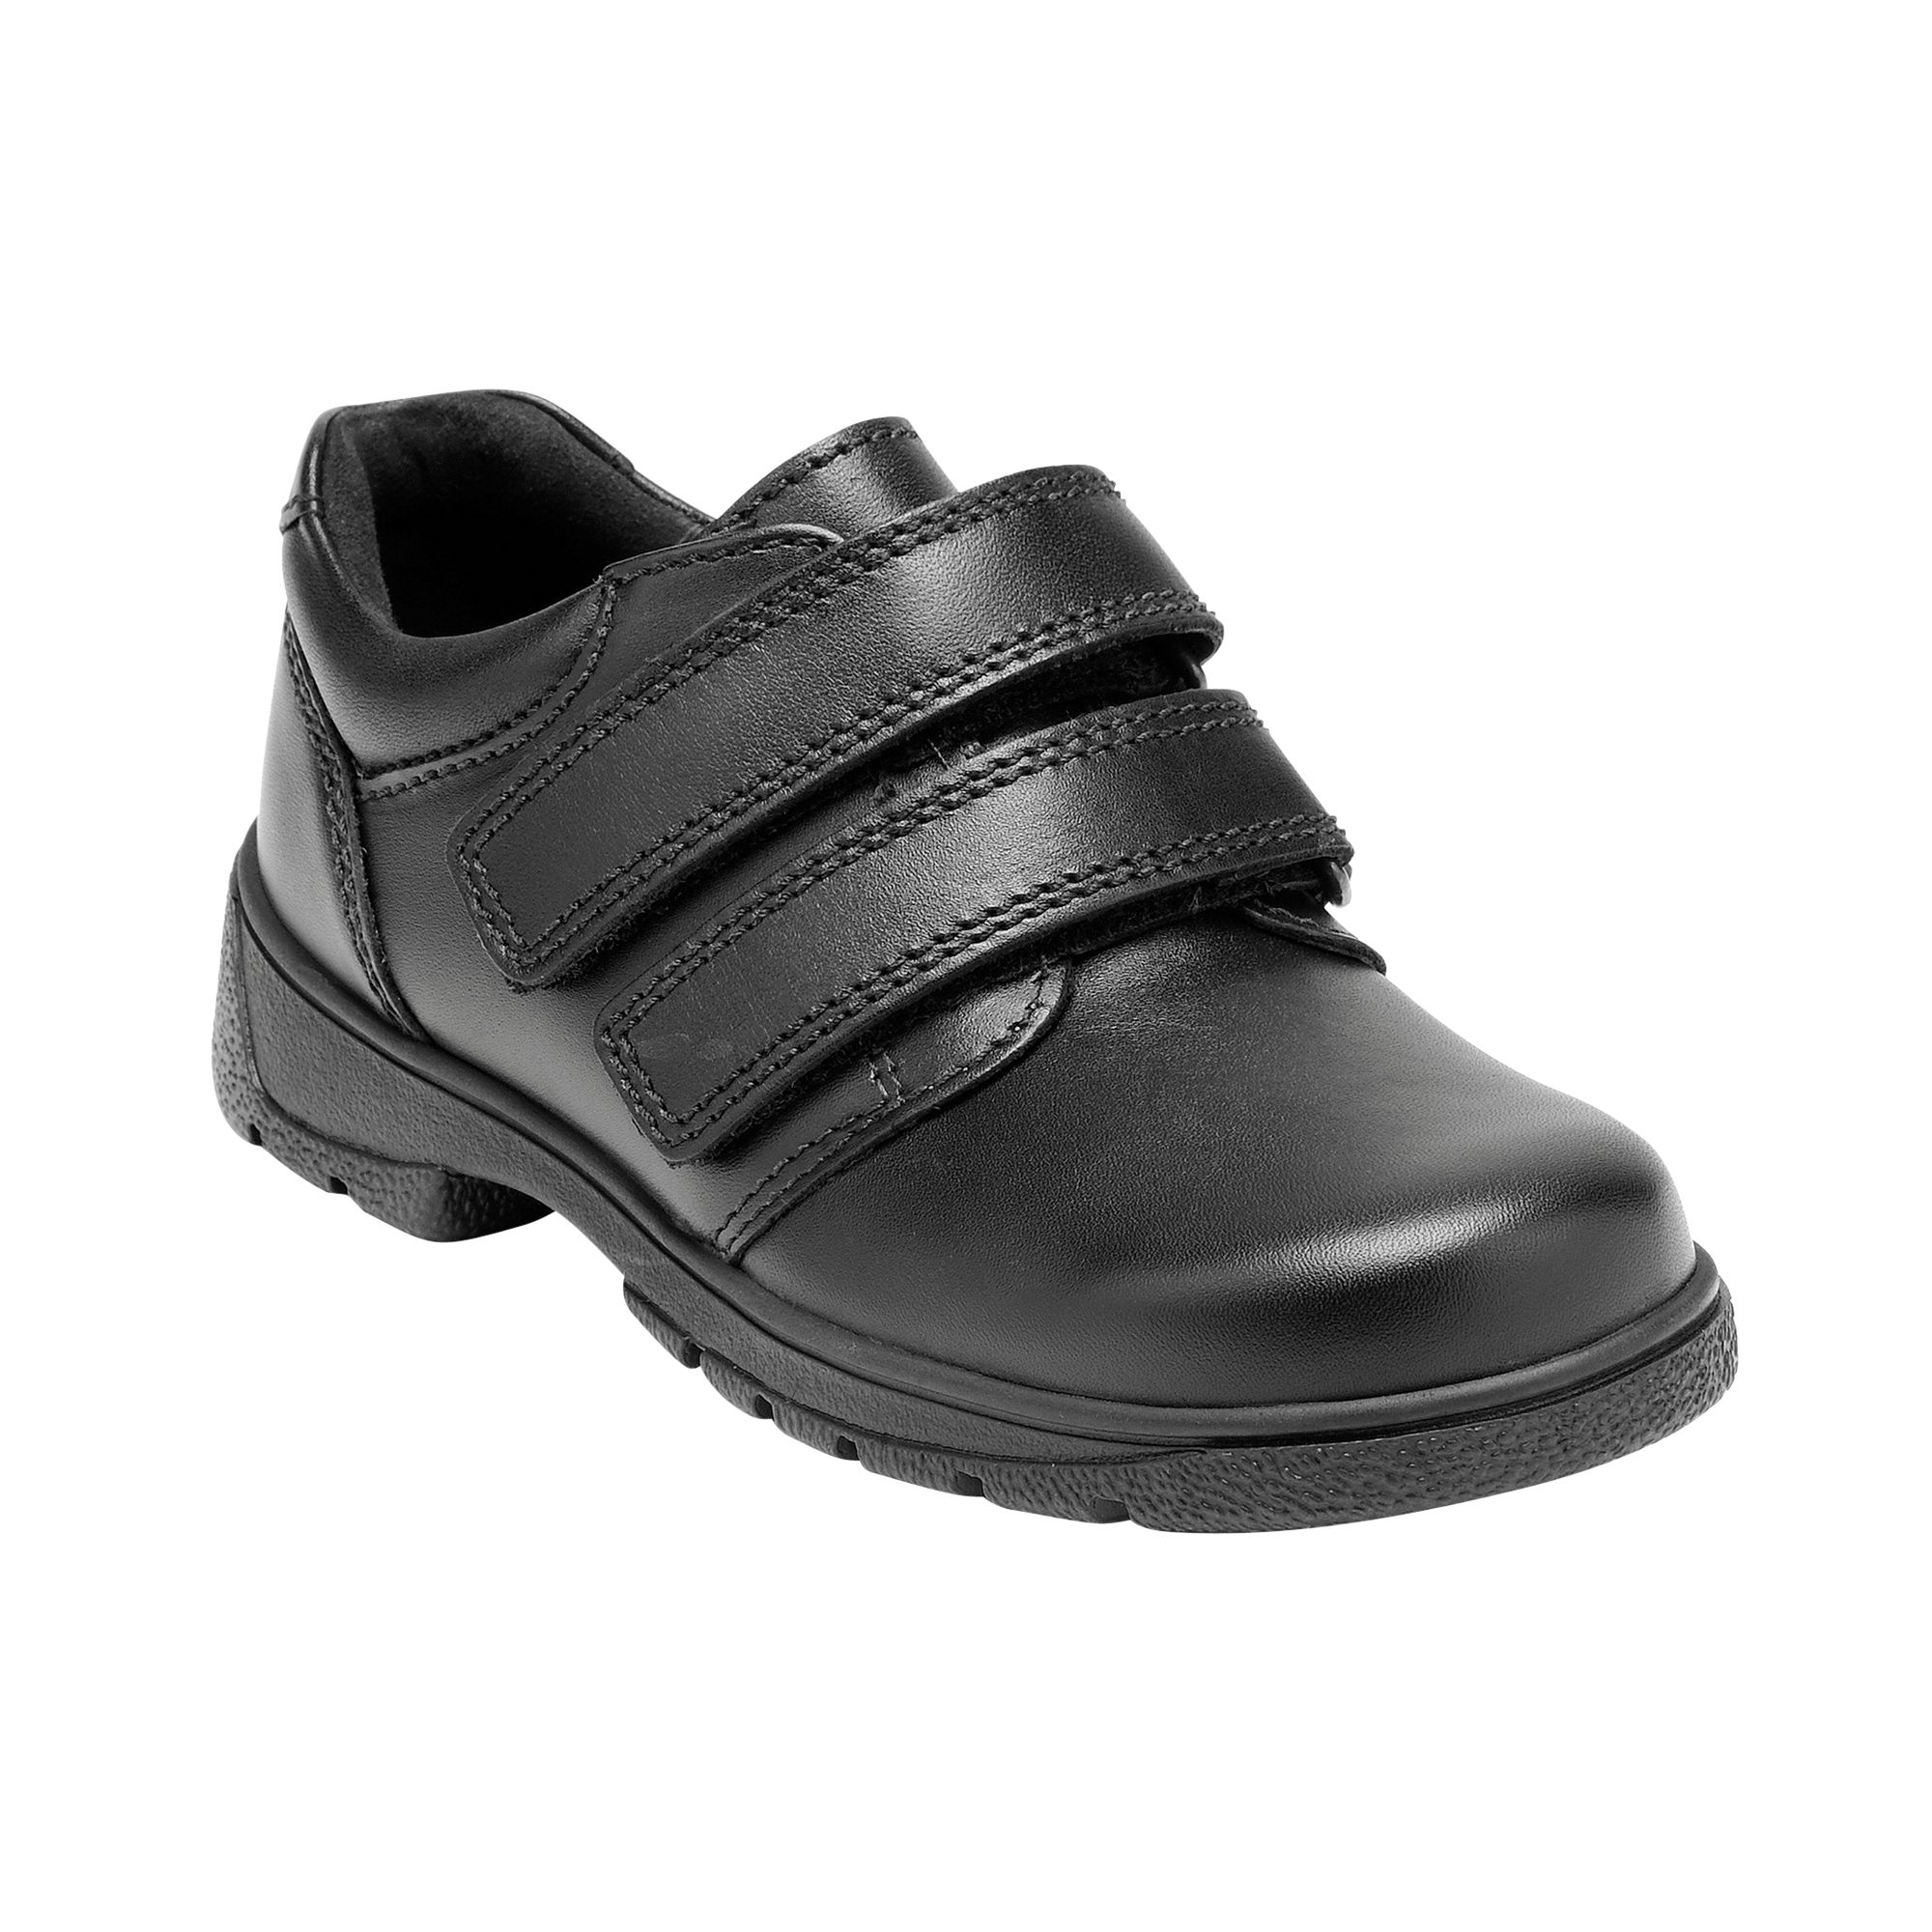 Start-rite Rotate Shoes, Black